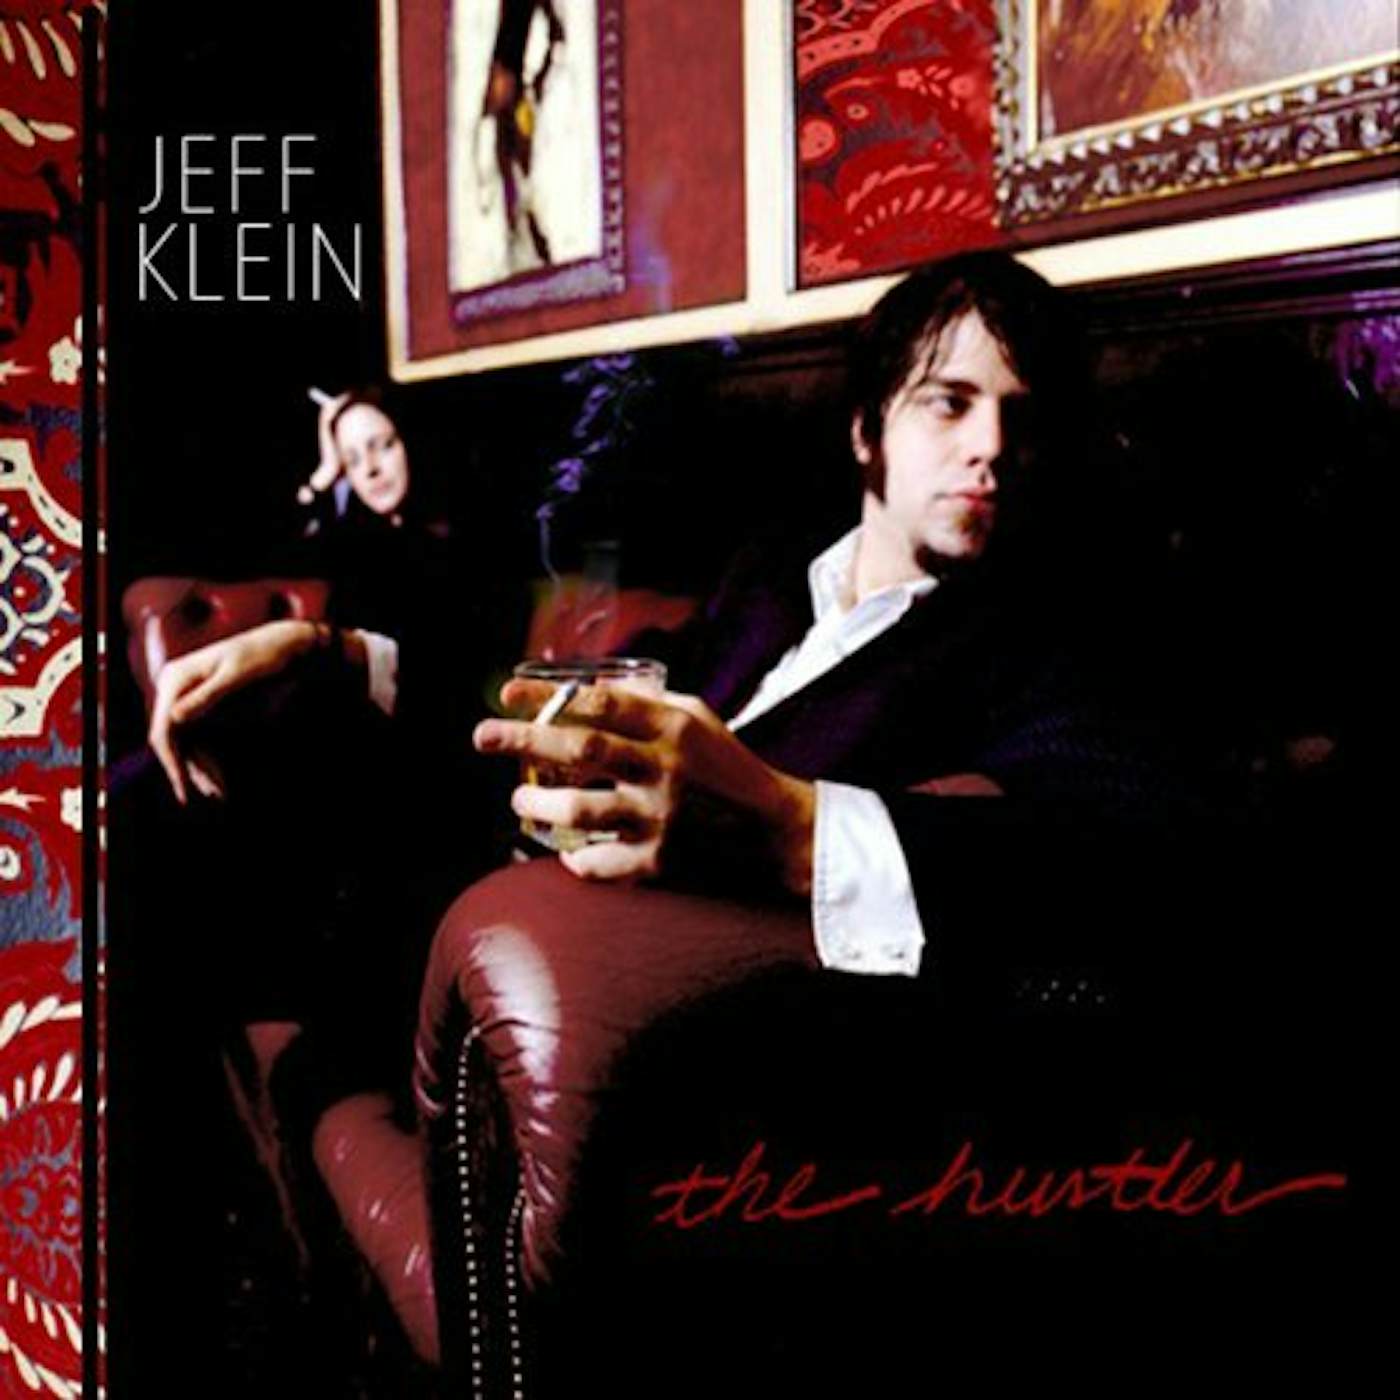 Jeff Klein HUSTLER CD